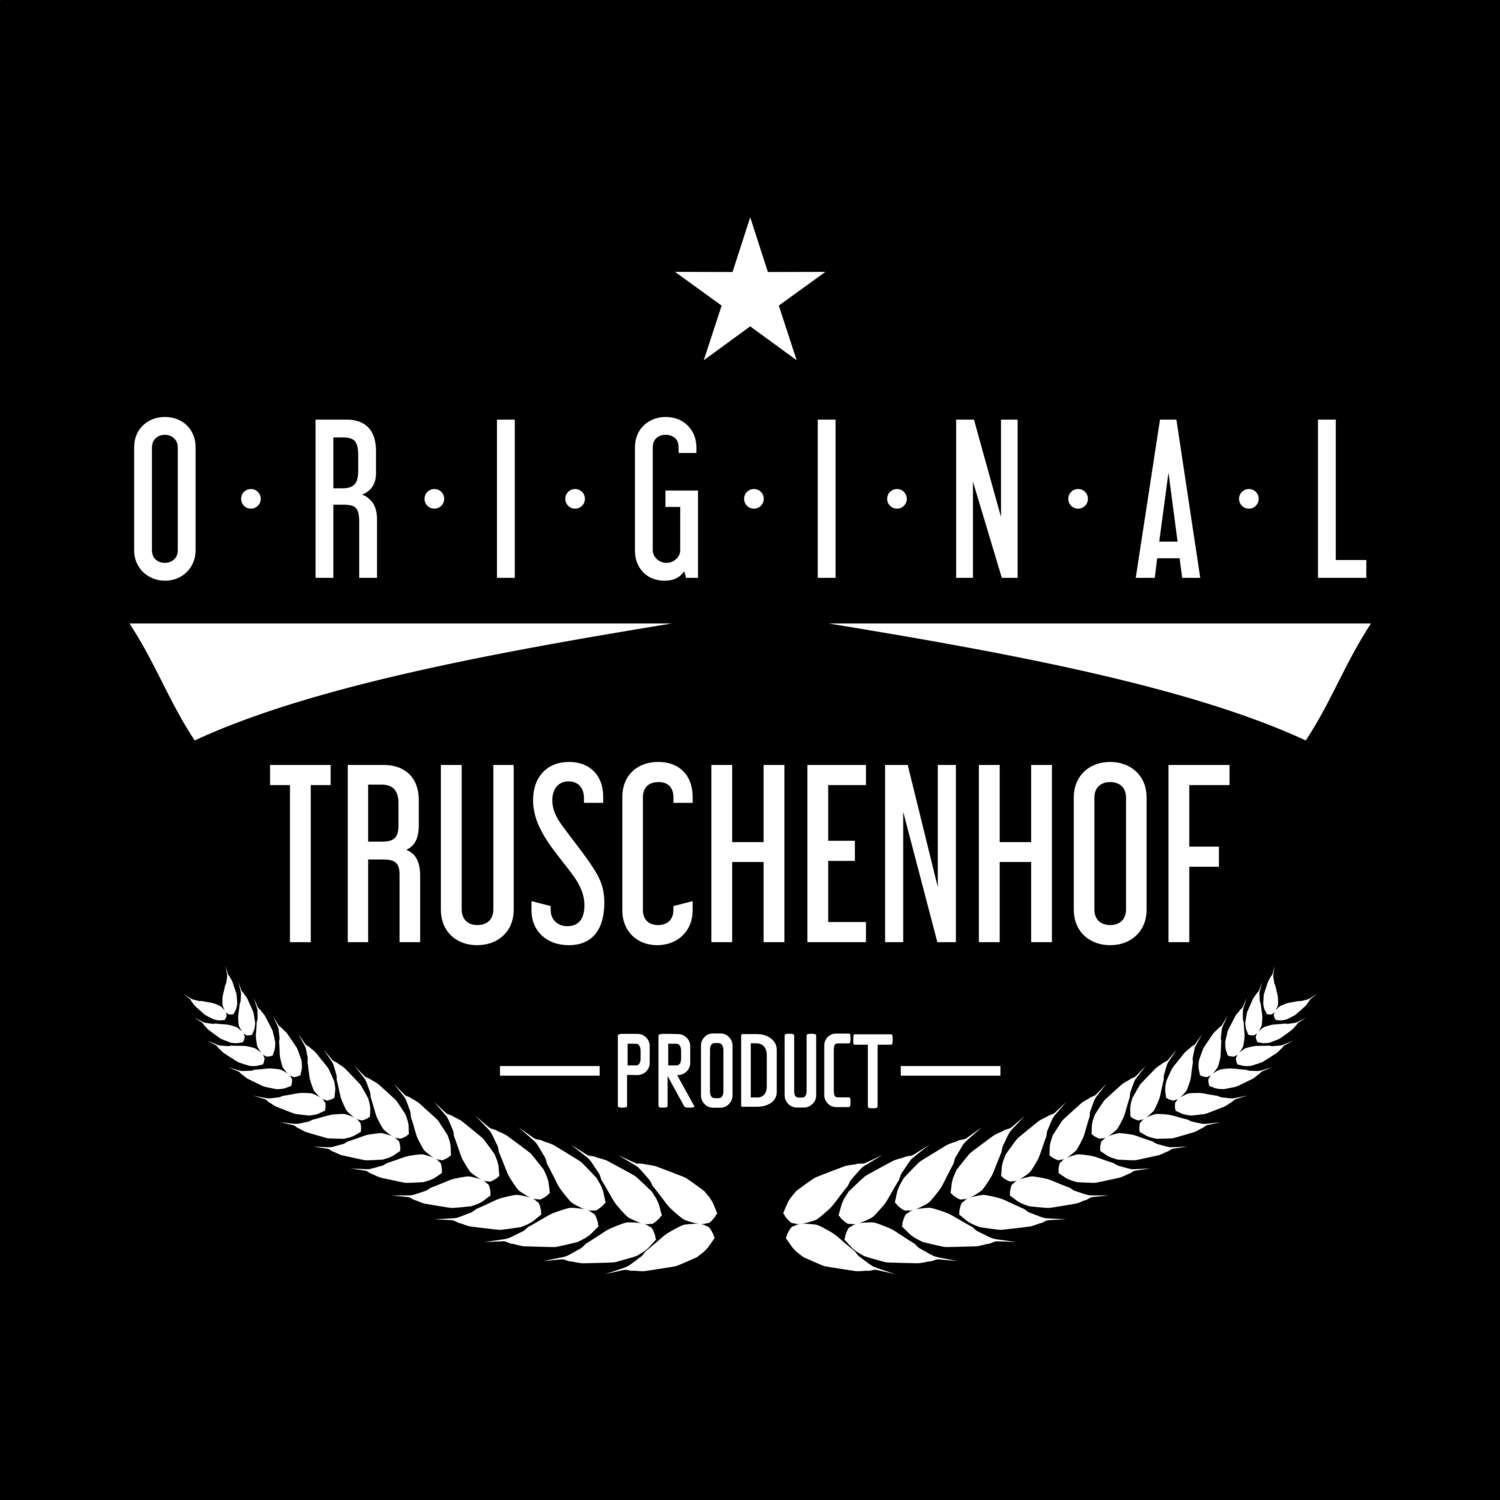 Truschenhof T-Shirt »Original Product«